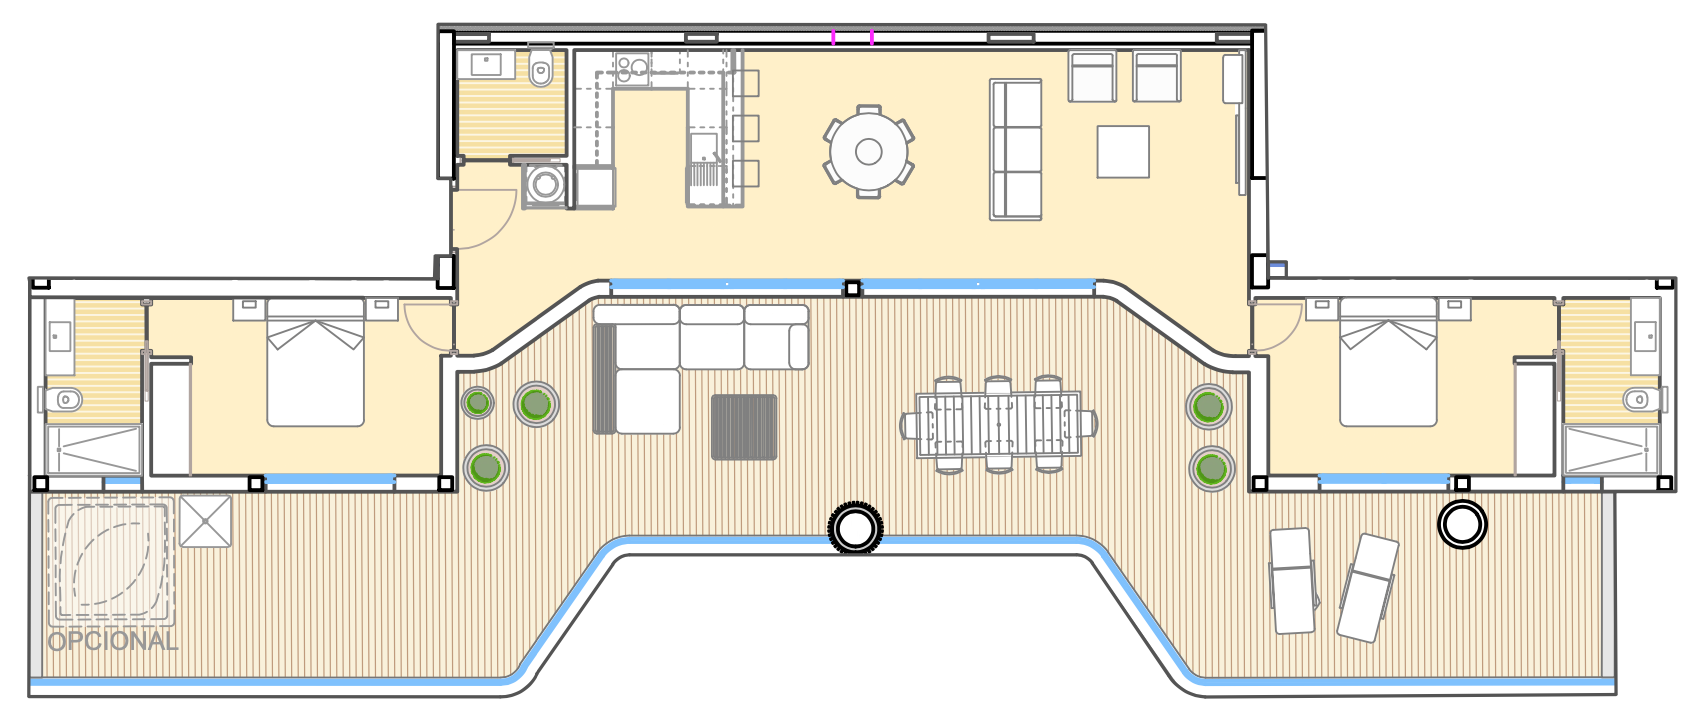 Floor plan for Apartment ref 3117 for sale in Isea Calma Spain - Murcia Dreams